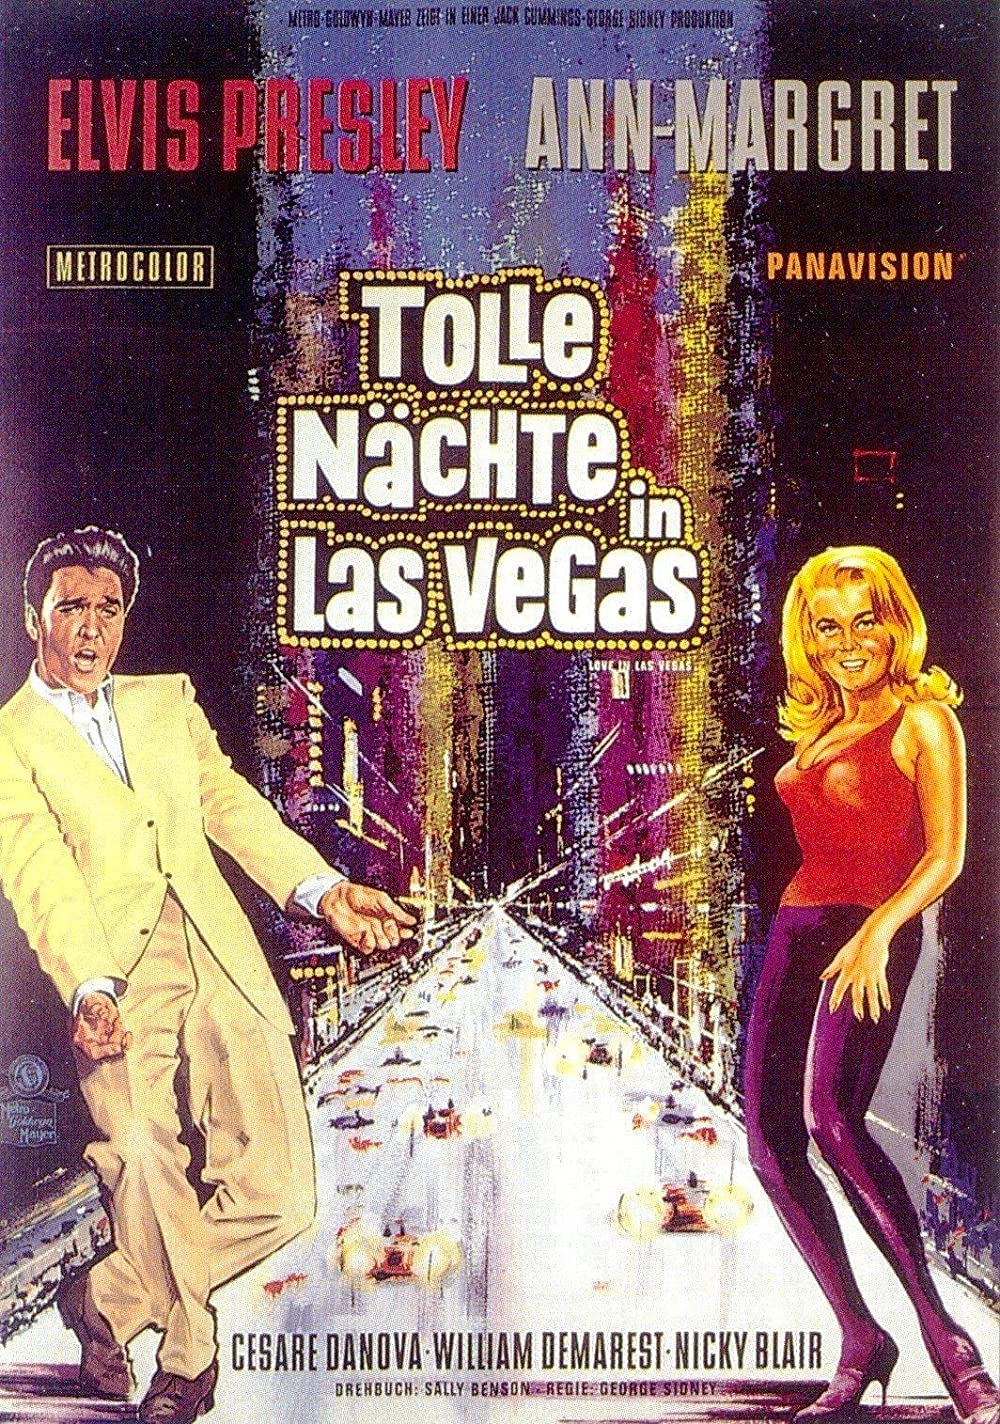 Filmbeschreibung zu Viva Las Vegas